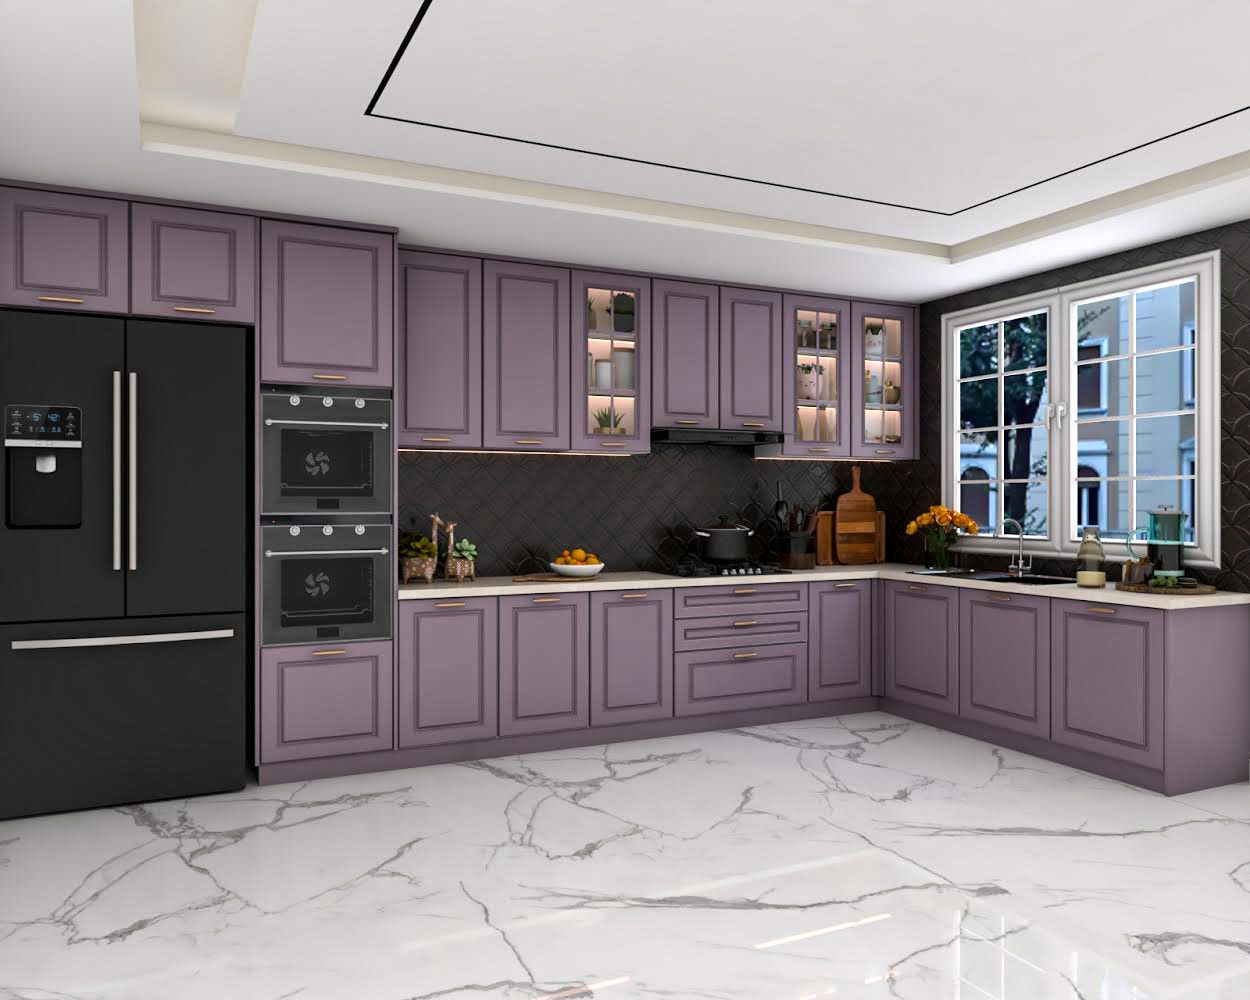 Contemporary L-Shaped Modular Kitchen Design With Purple Lilla Fiore Cabinets And Black Dado Tiles